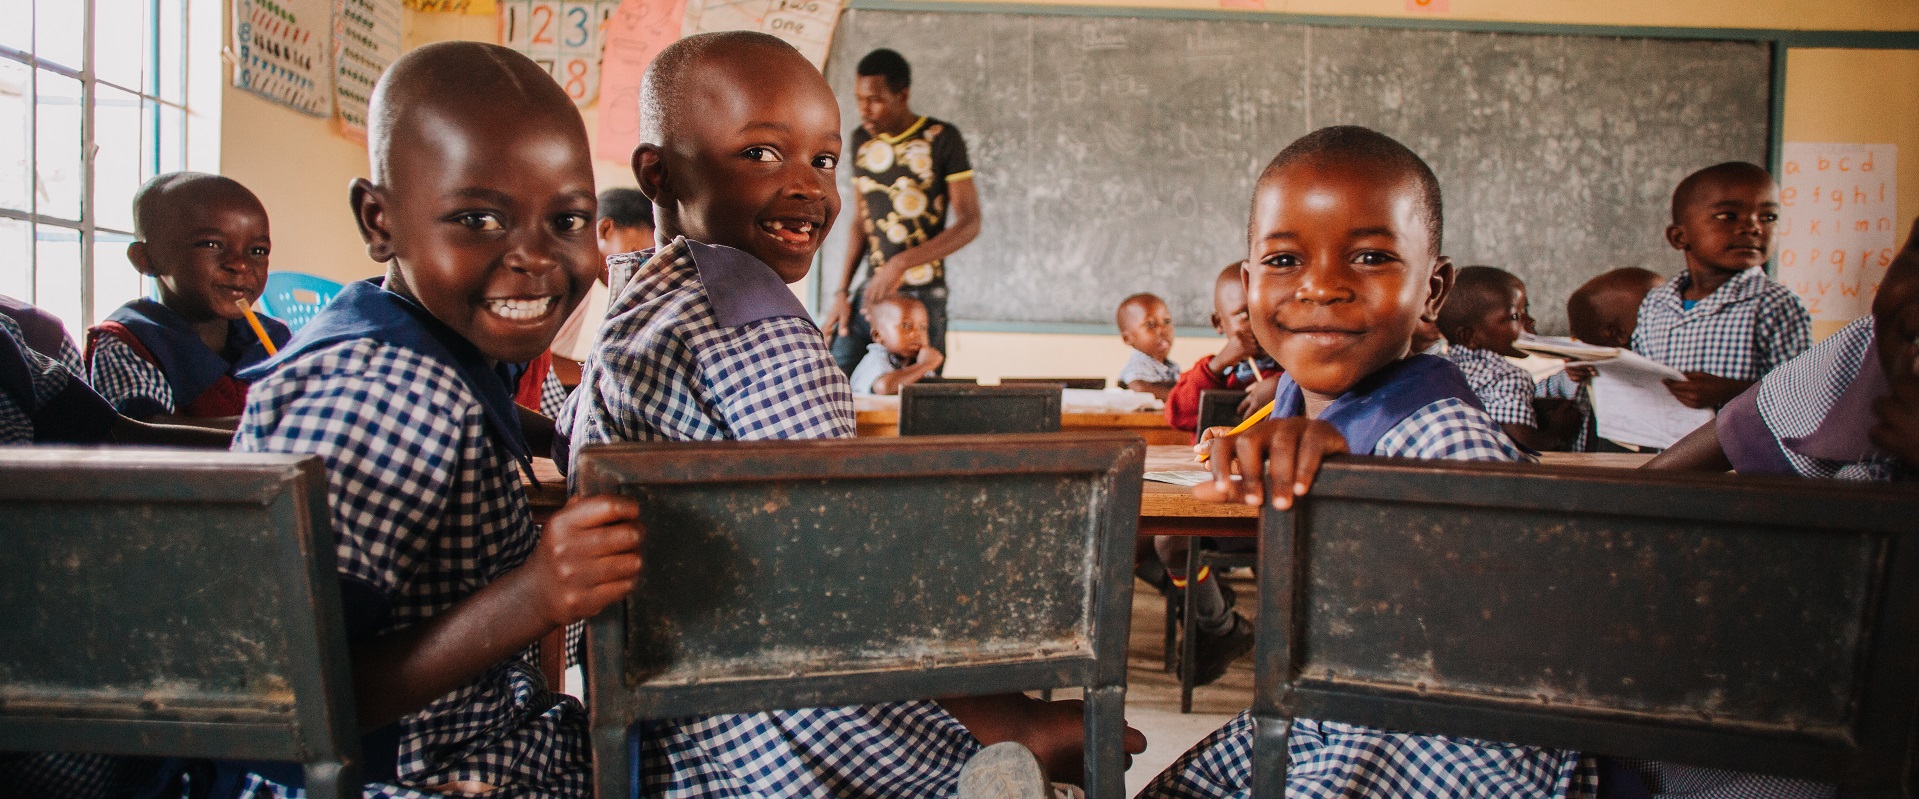 Bambini in una scuola in Benin